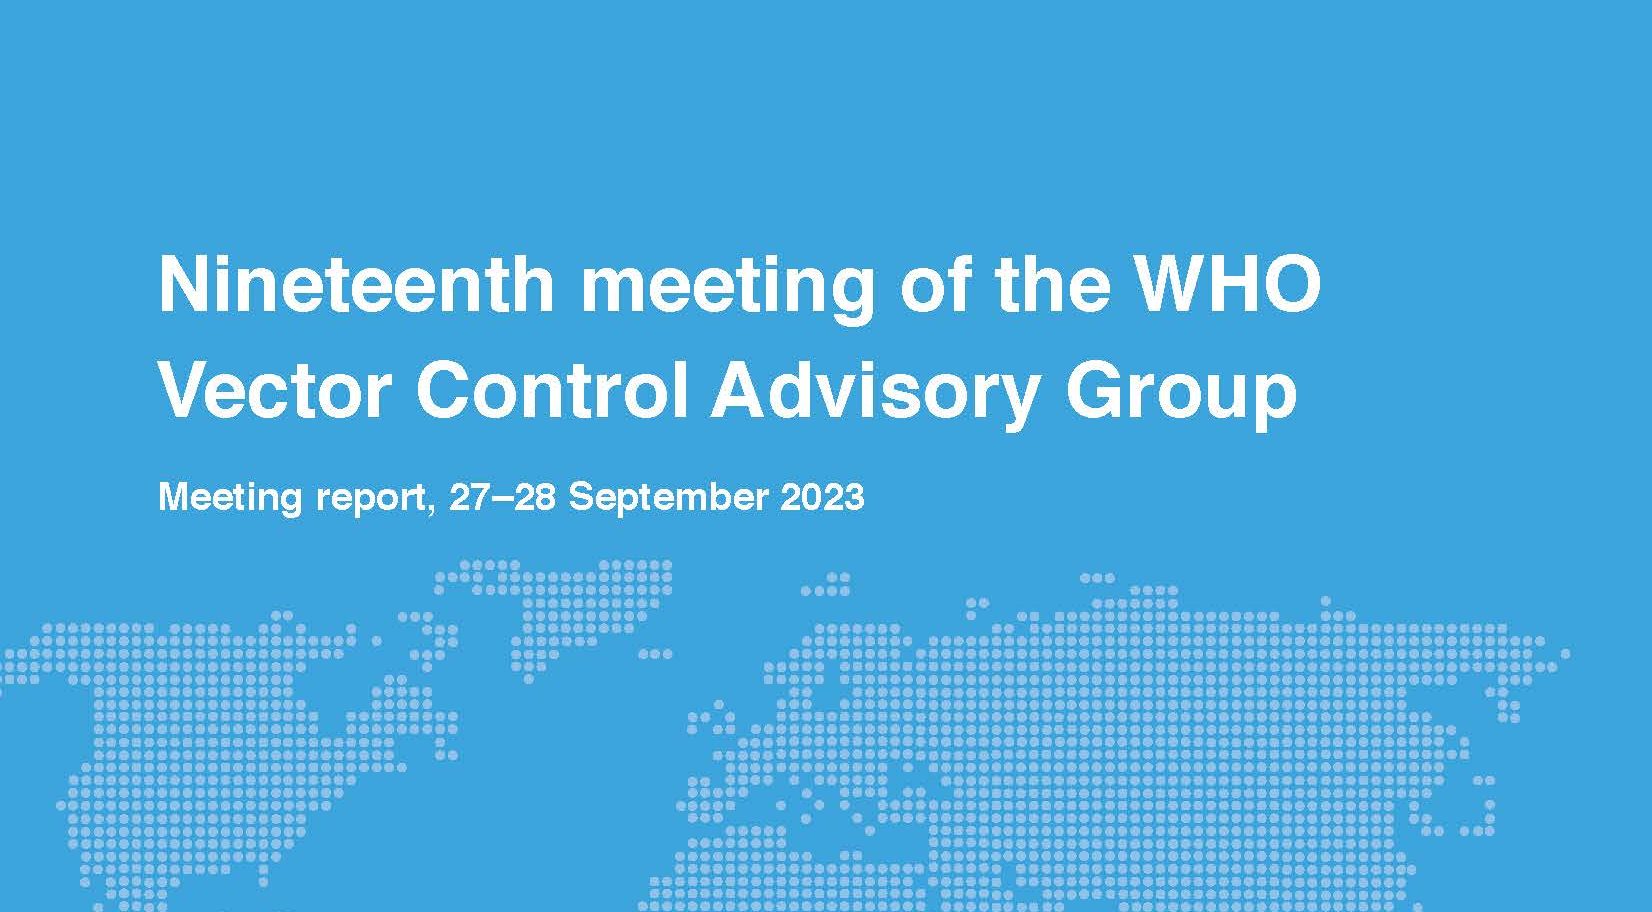 WHO Vector Control Advisory Group